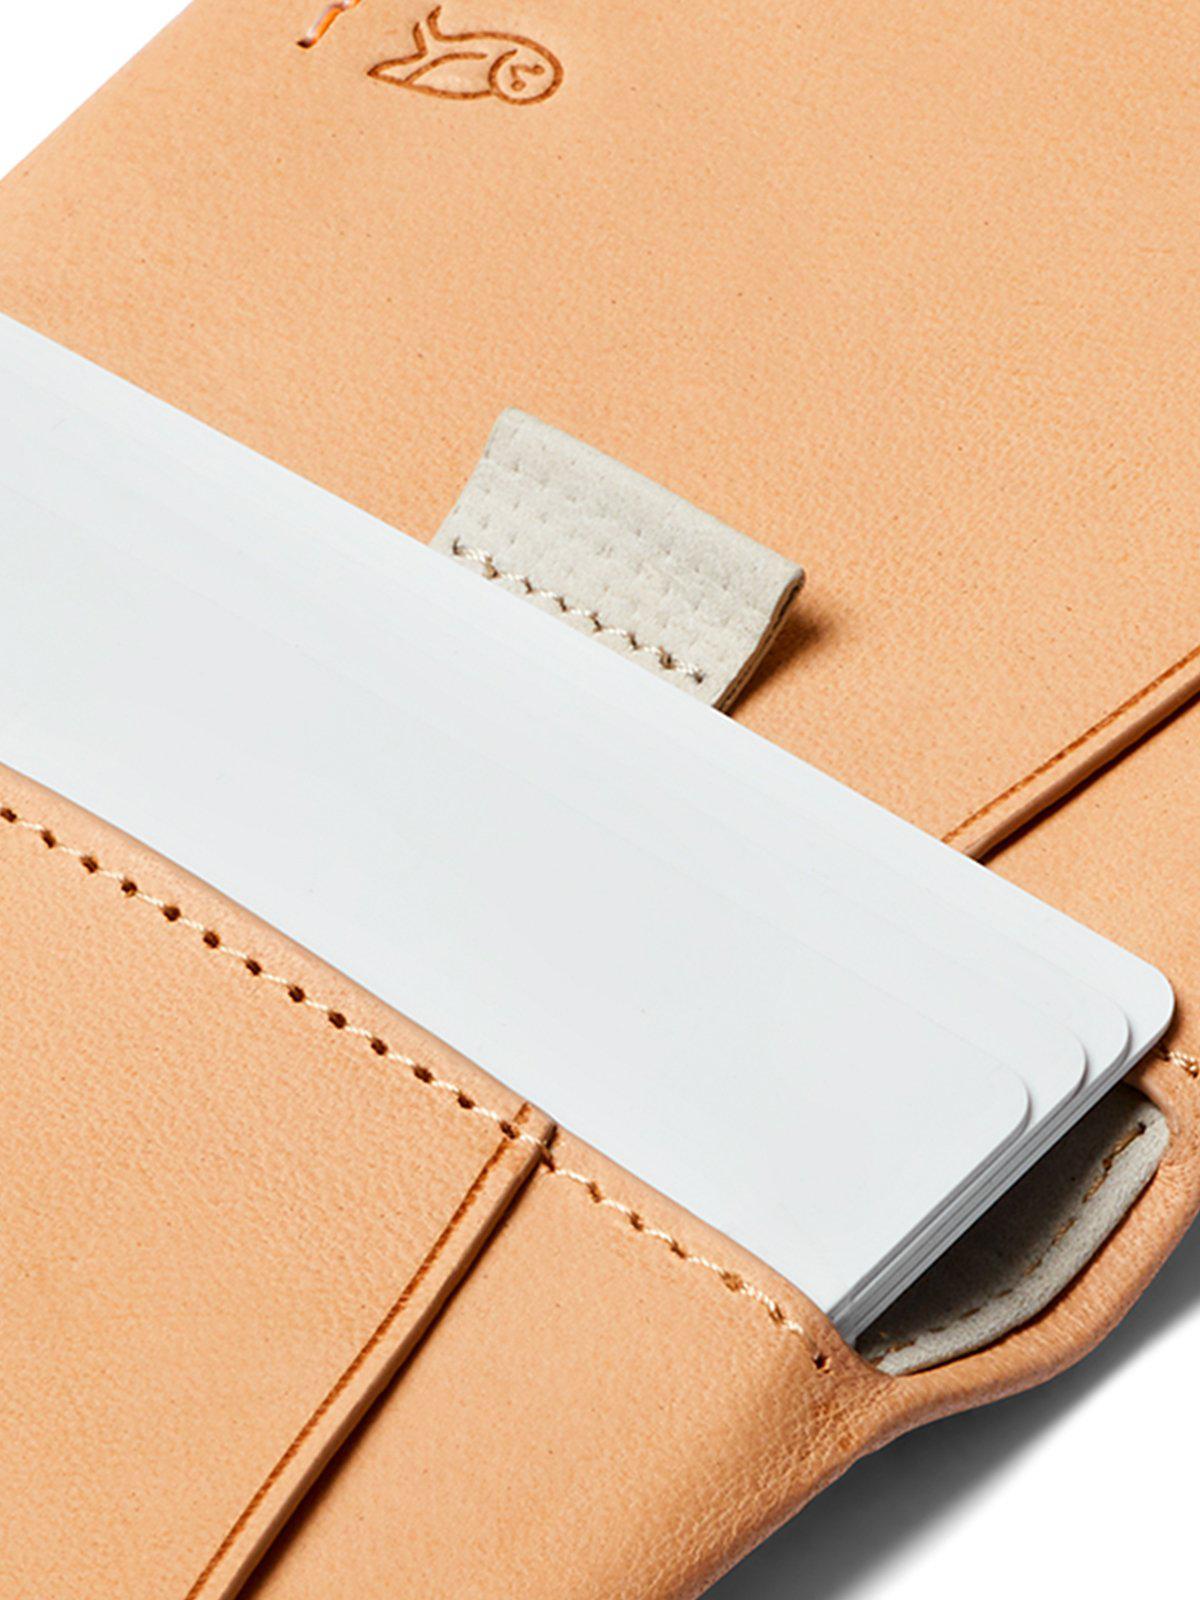 Bellroy Slim Sleeve Wallet Premium Edition Natural RFID